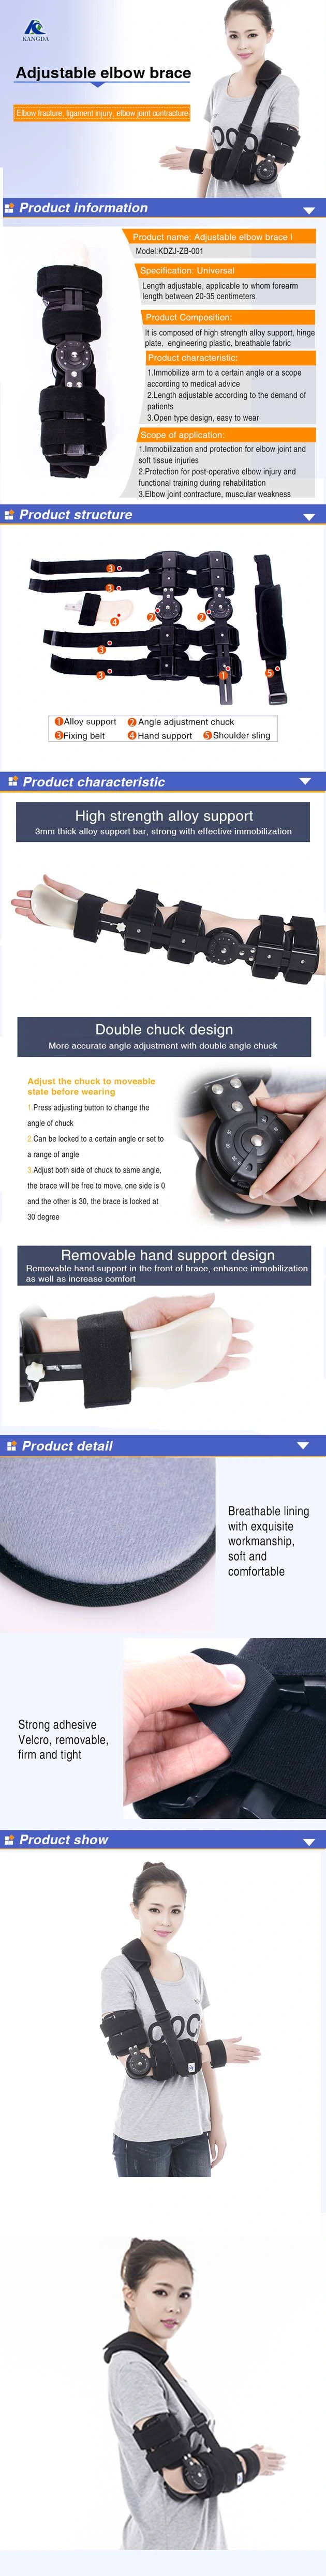 Kangda Adjustable Elbow Brace OEM Available